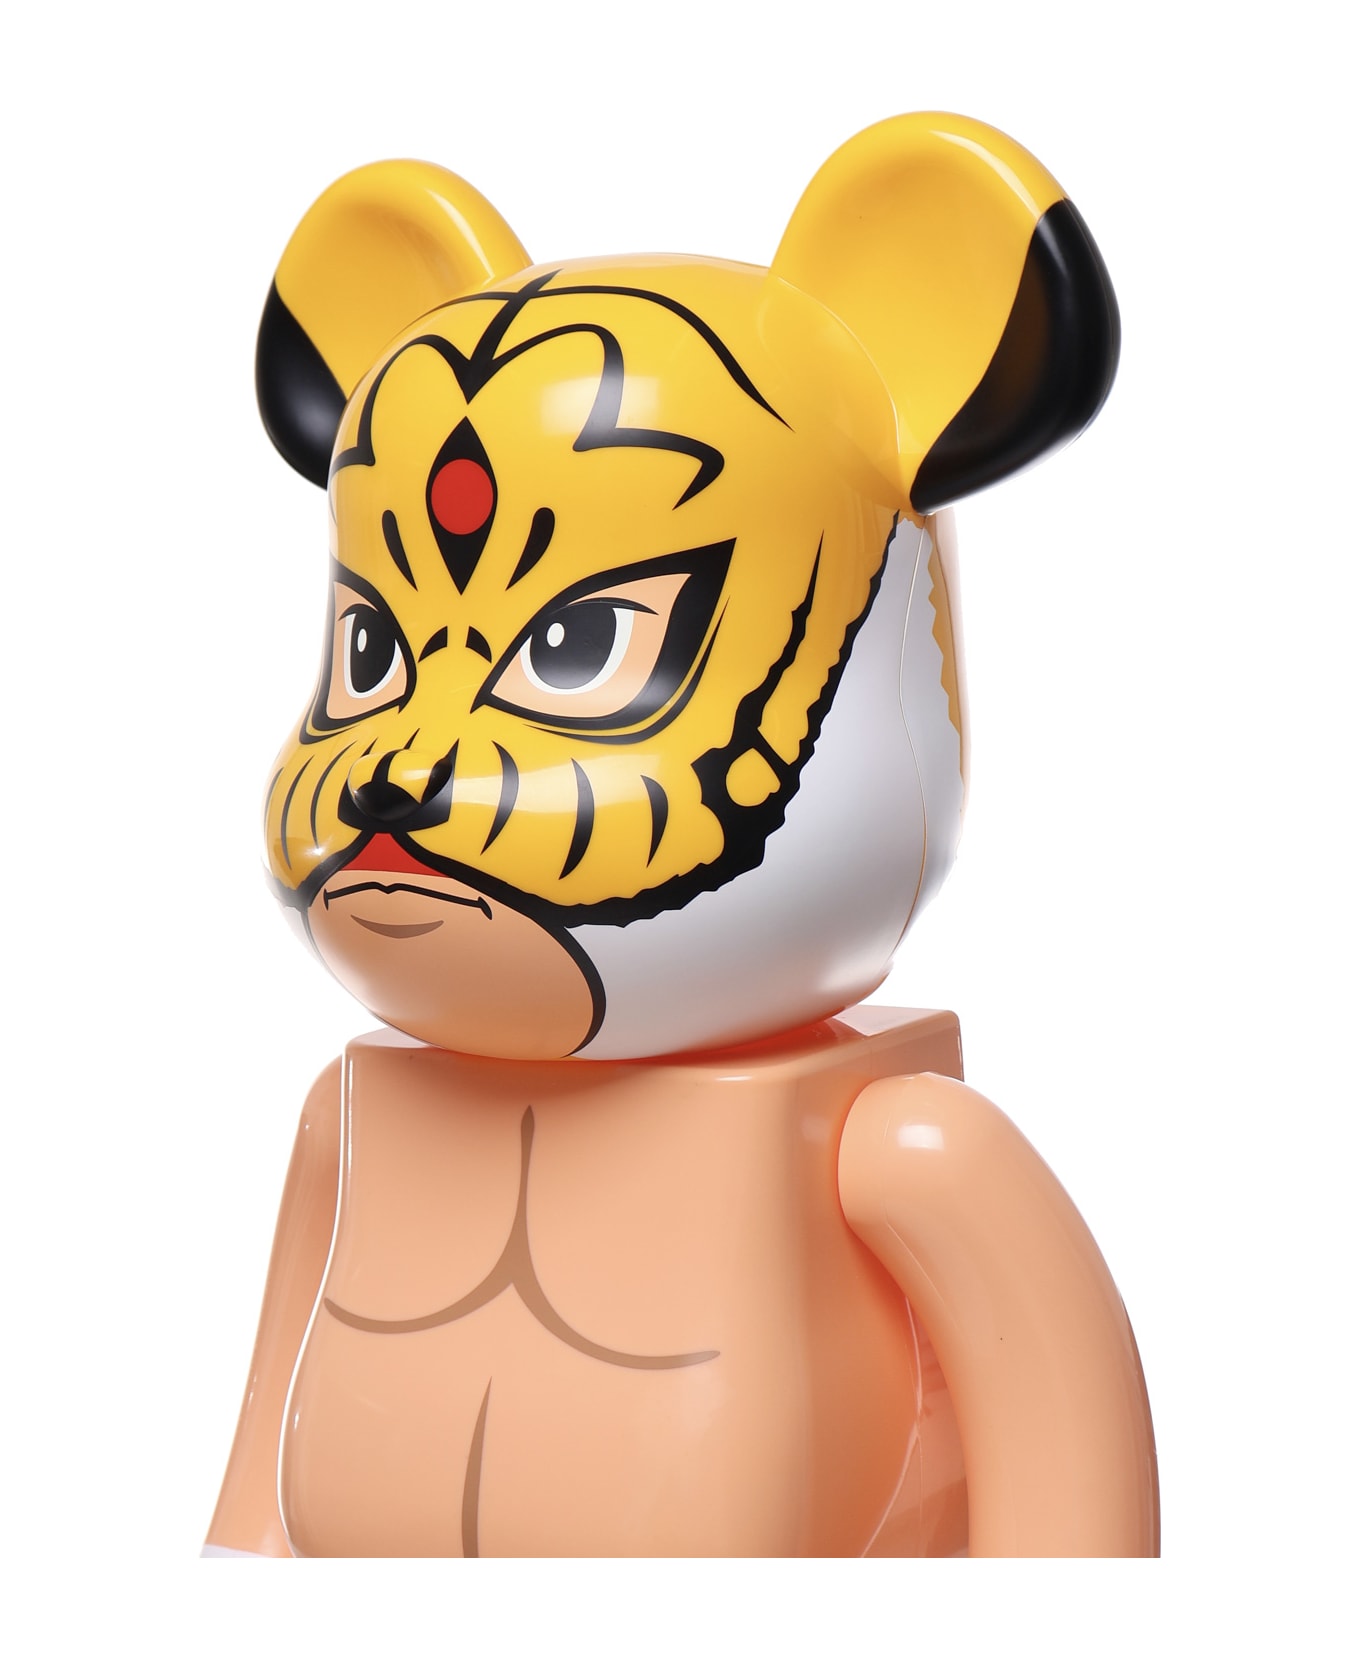 Medicom Toy Tiger Mask - MultiColour